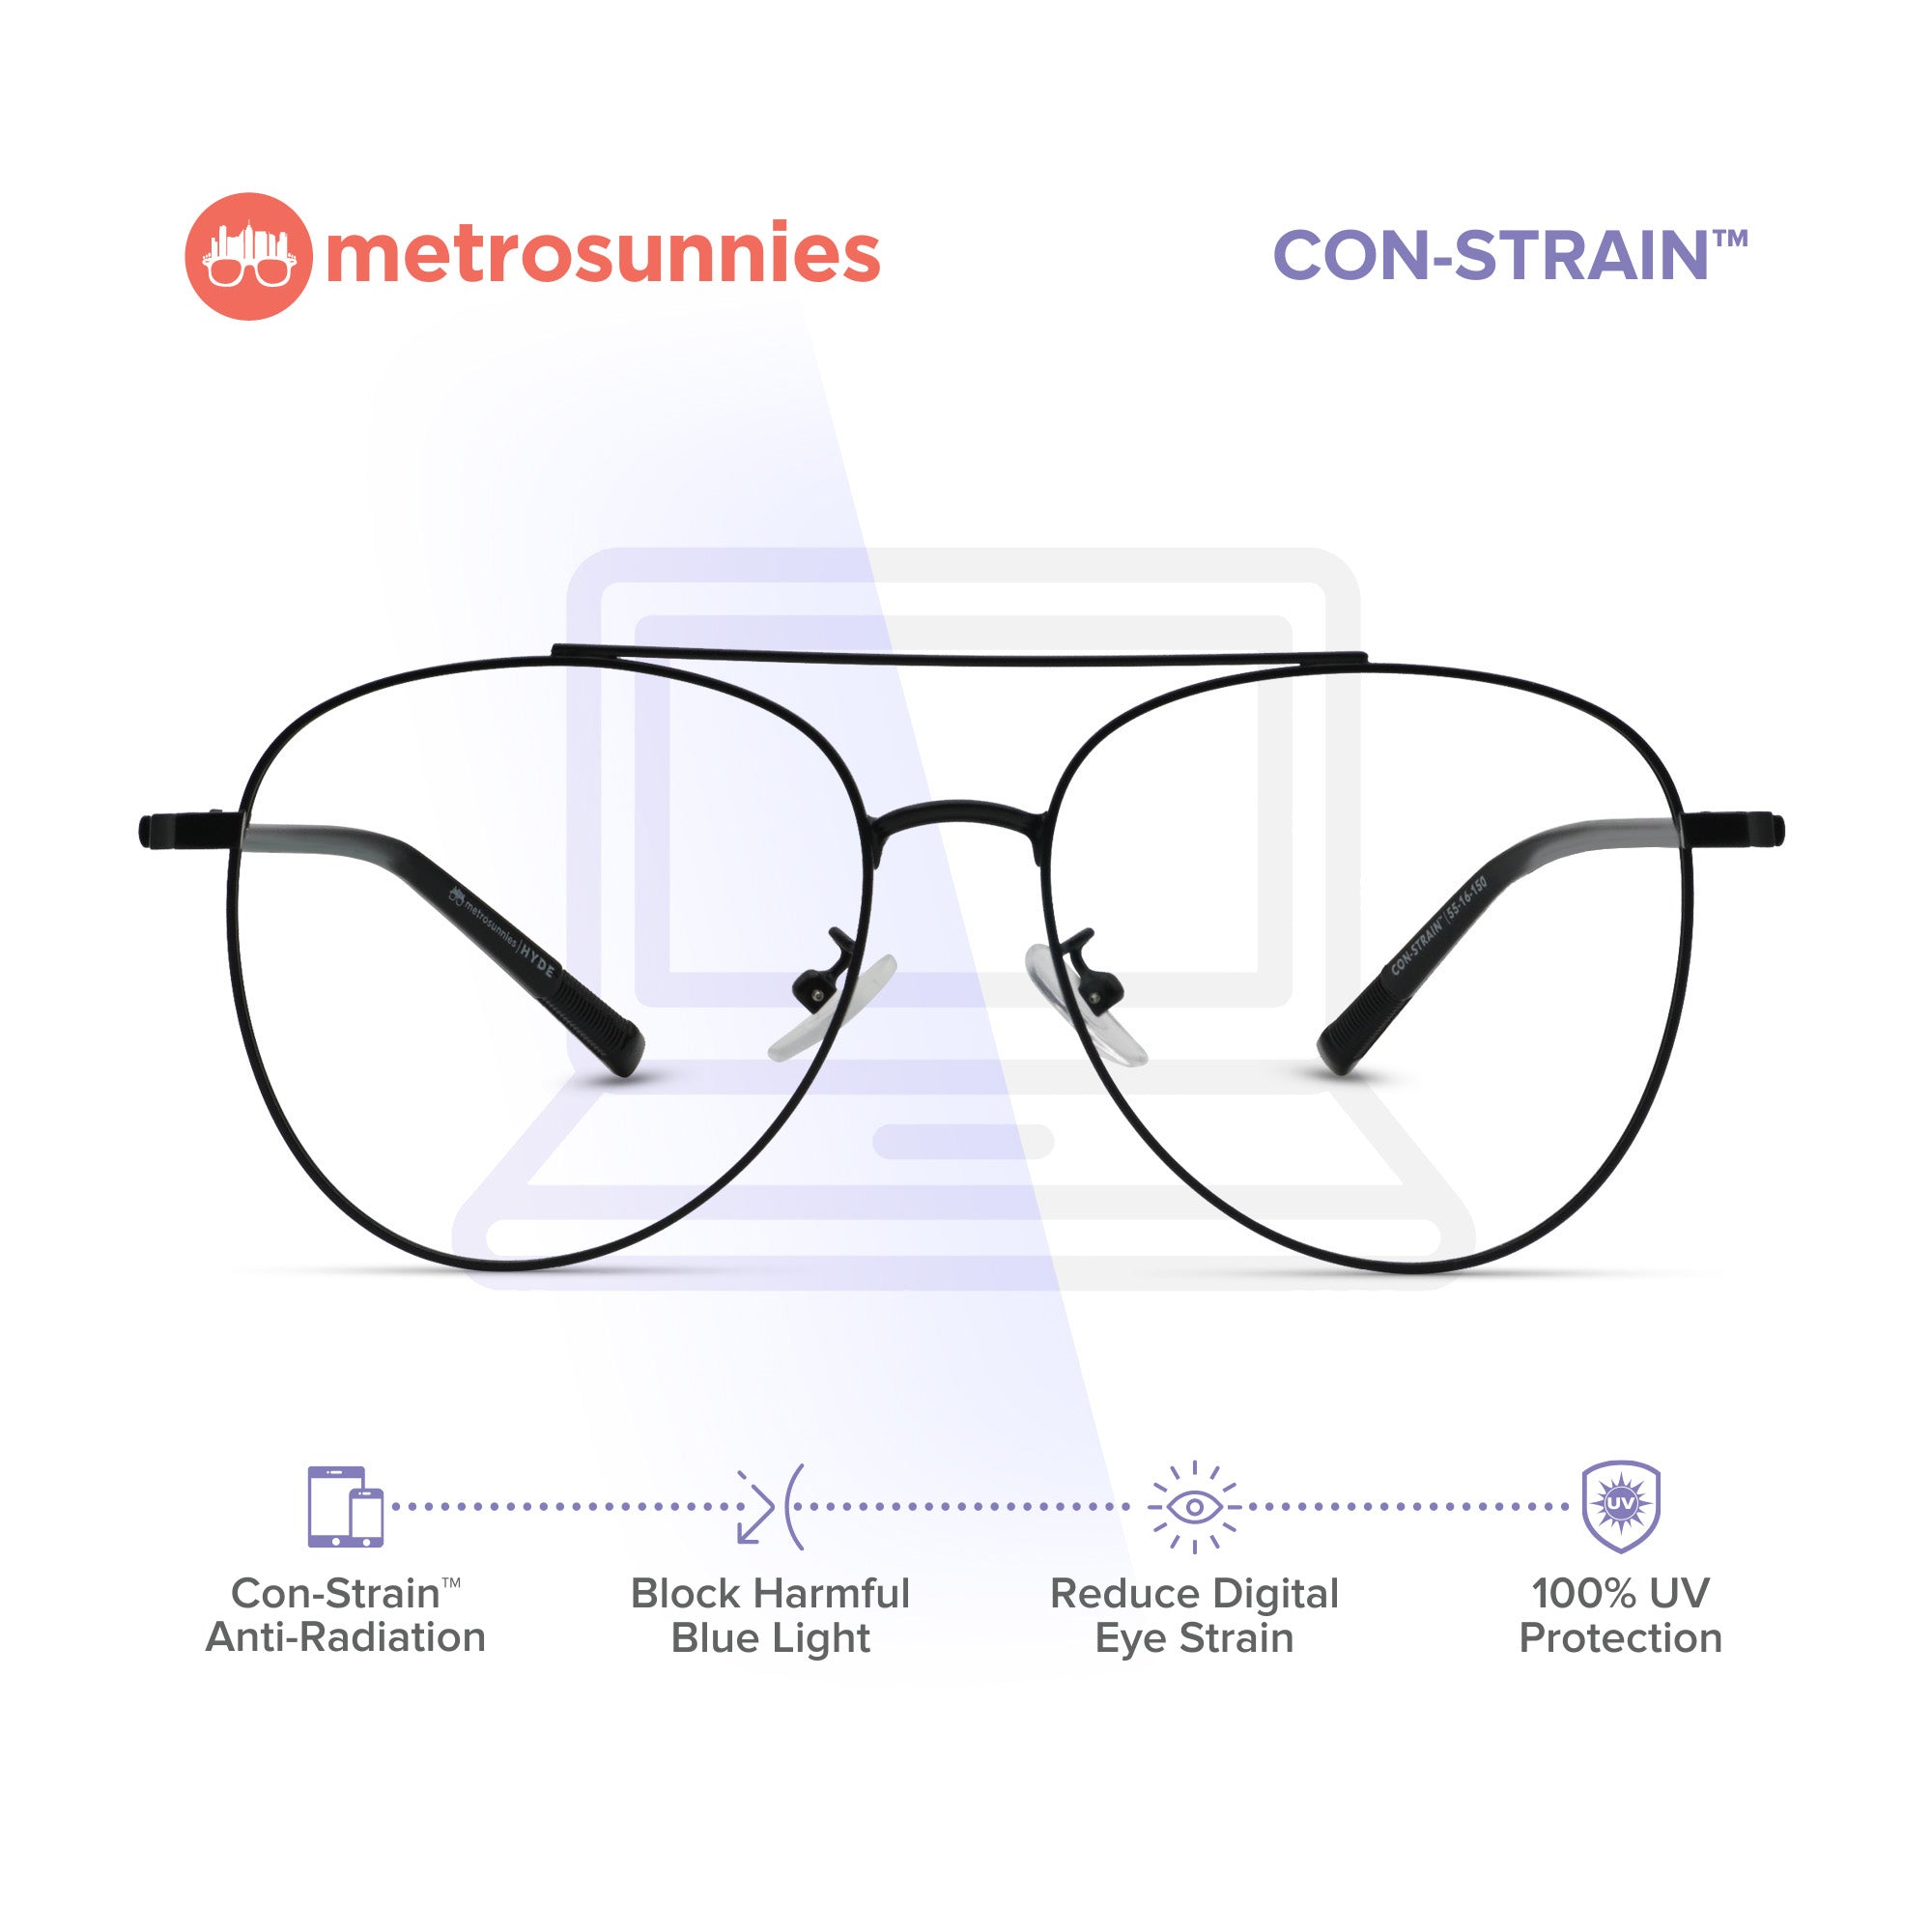 MetroSunnies Hyde Specs (Black) / Con-Strain Blue Light / Anti-Radiation Computer Eyeglasses